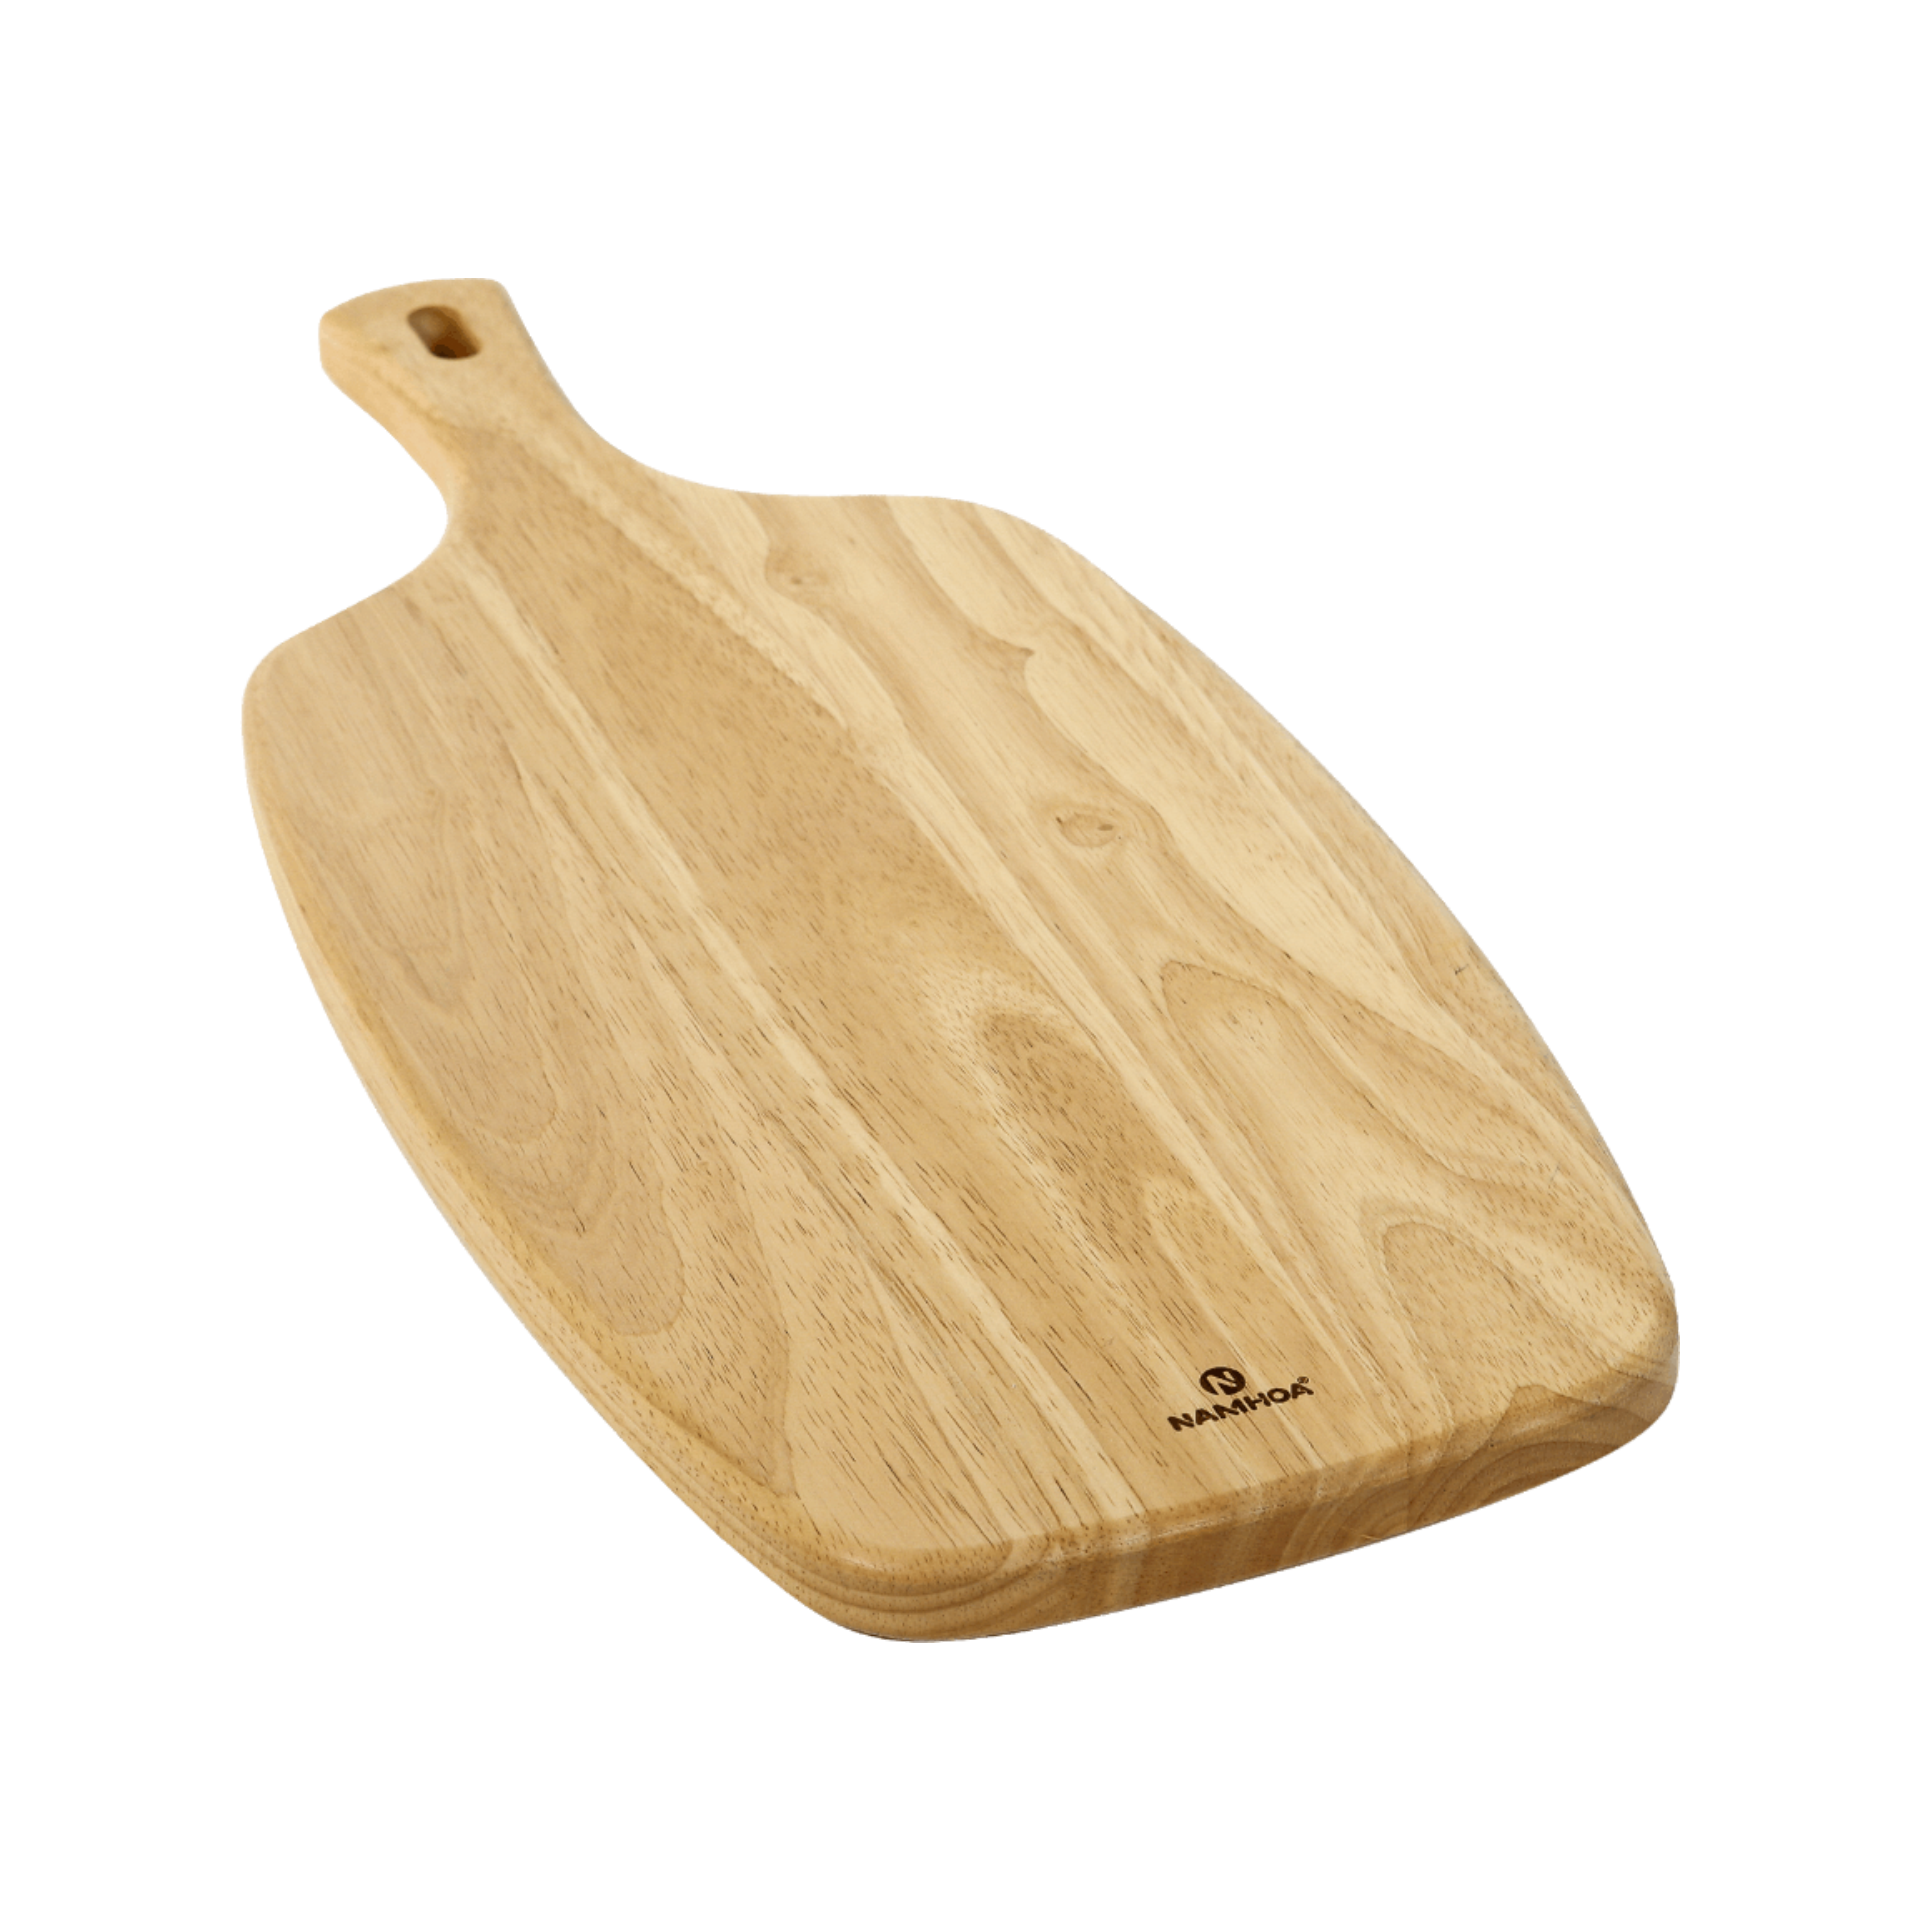 Medium Paddle shape cutting board